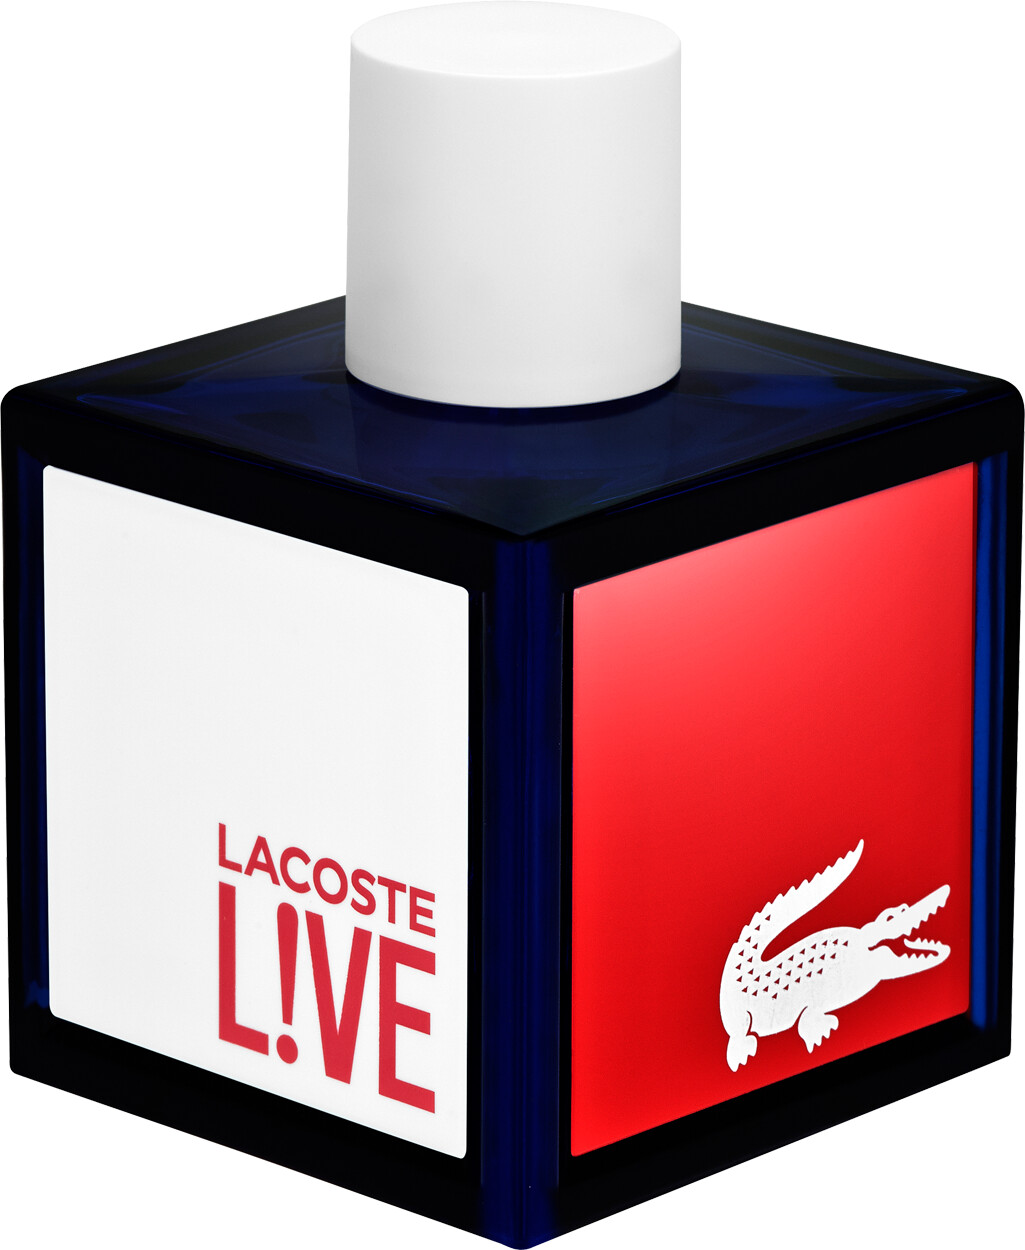 lacoste live perfume 100ml